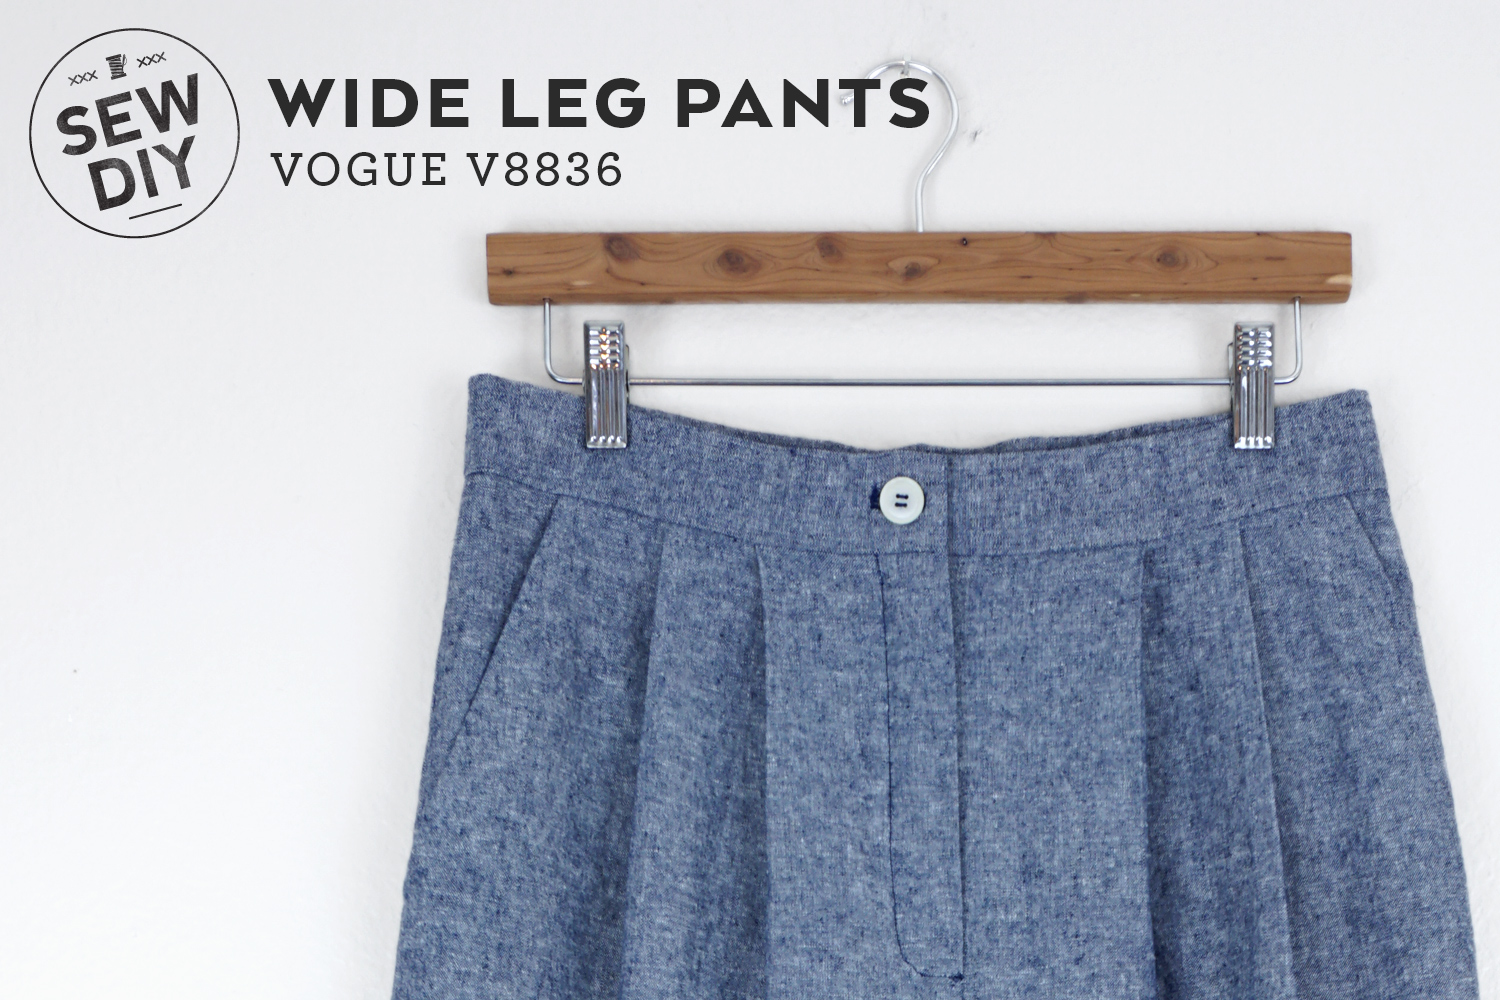 DIY Wide Leg Pants Vogue V8836 — Sew DIY